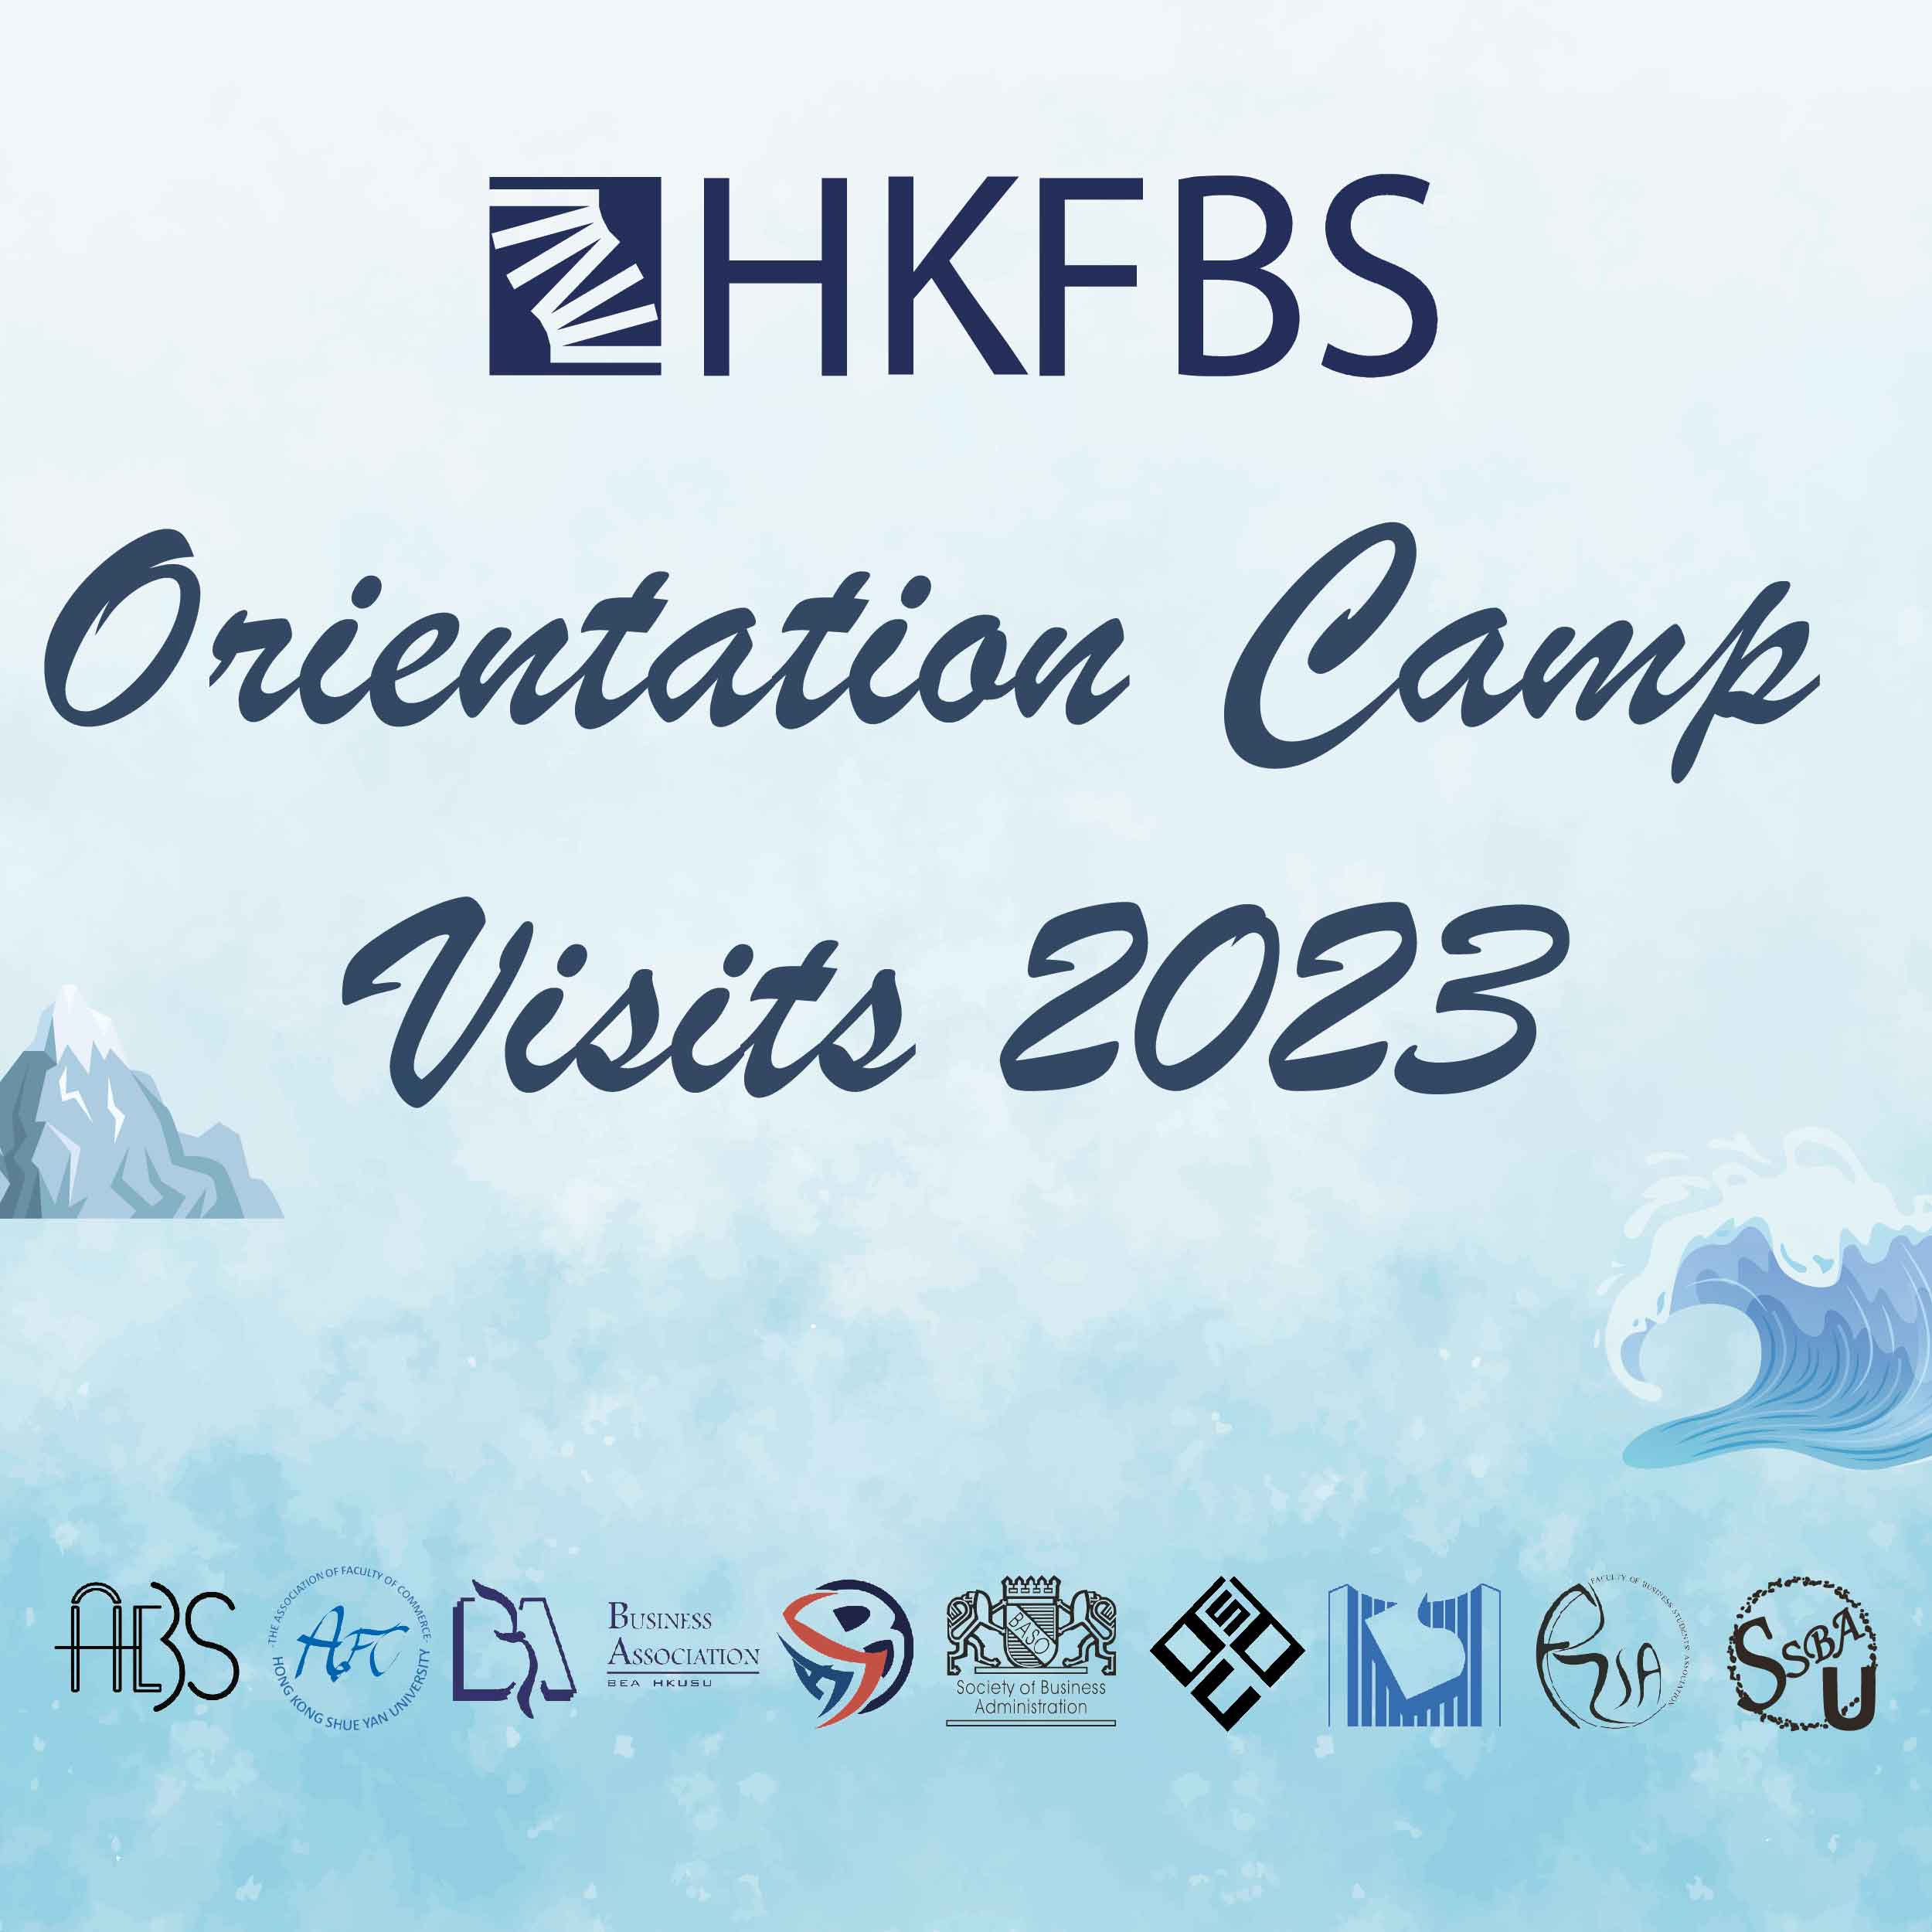 Orientation Camp Visit 2023